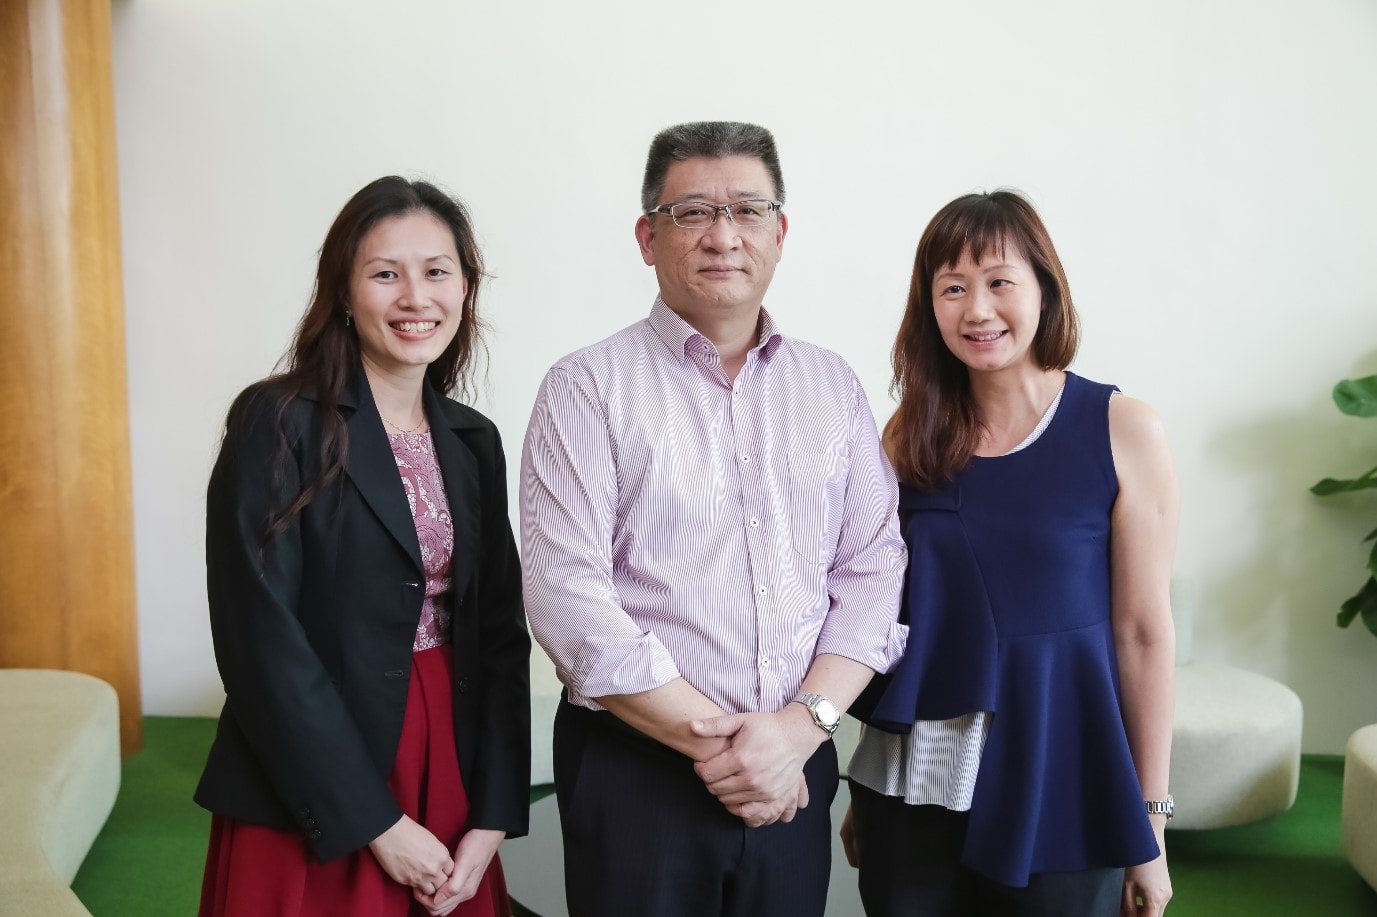 Winners for 2019 
From left to right: Presilia Toh Wai Mun, Clement Nicholas Tan Chyi Ming, Ng Yuen Mun